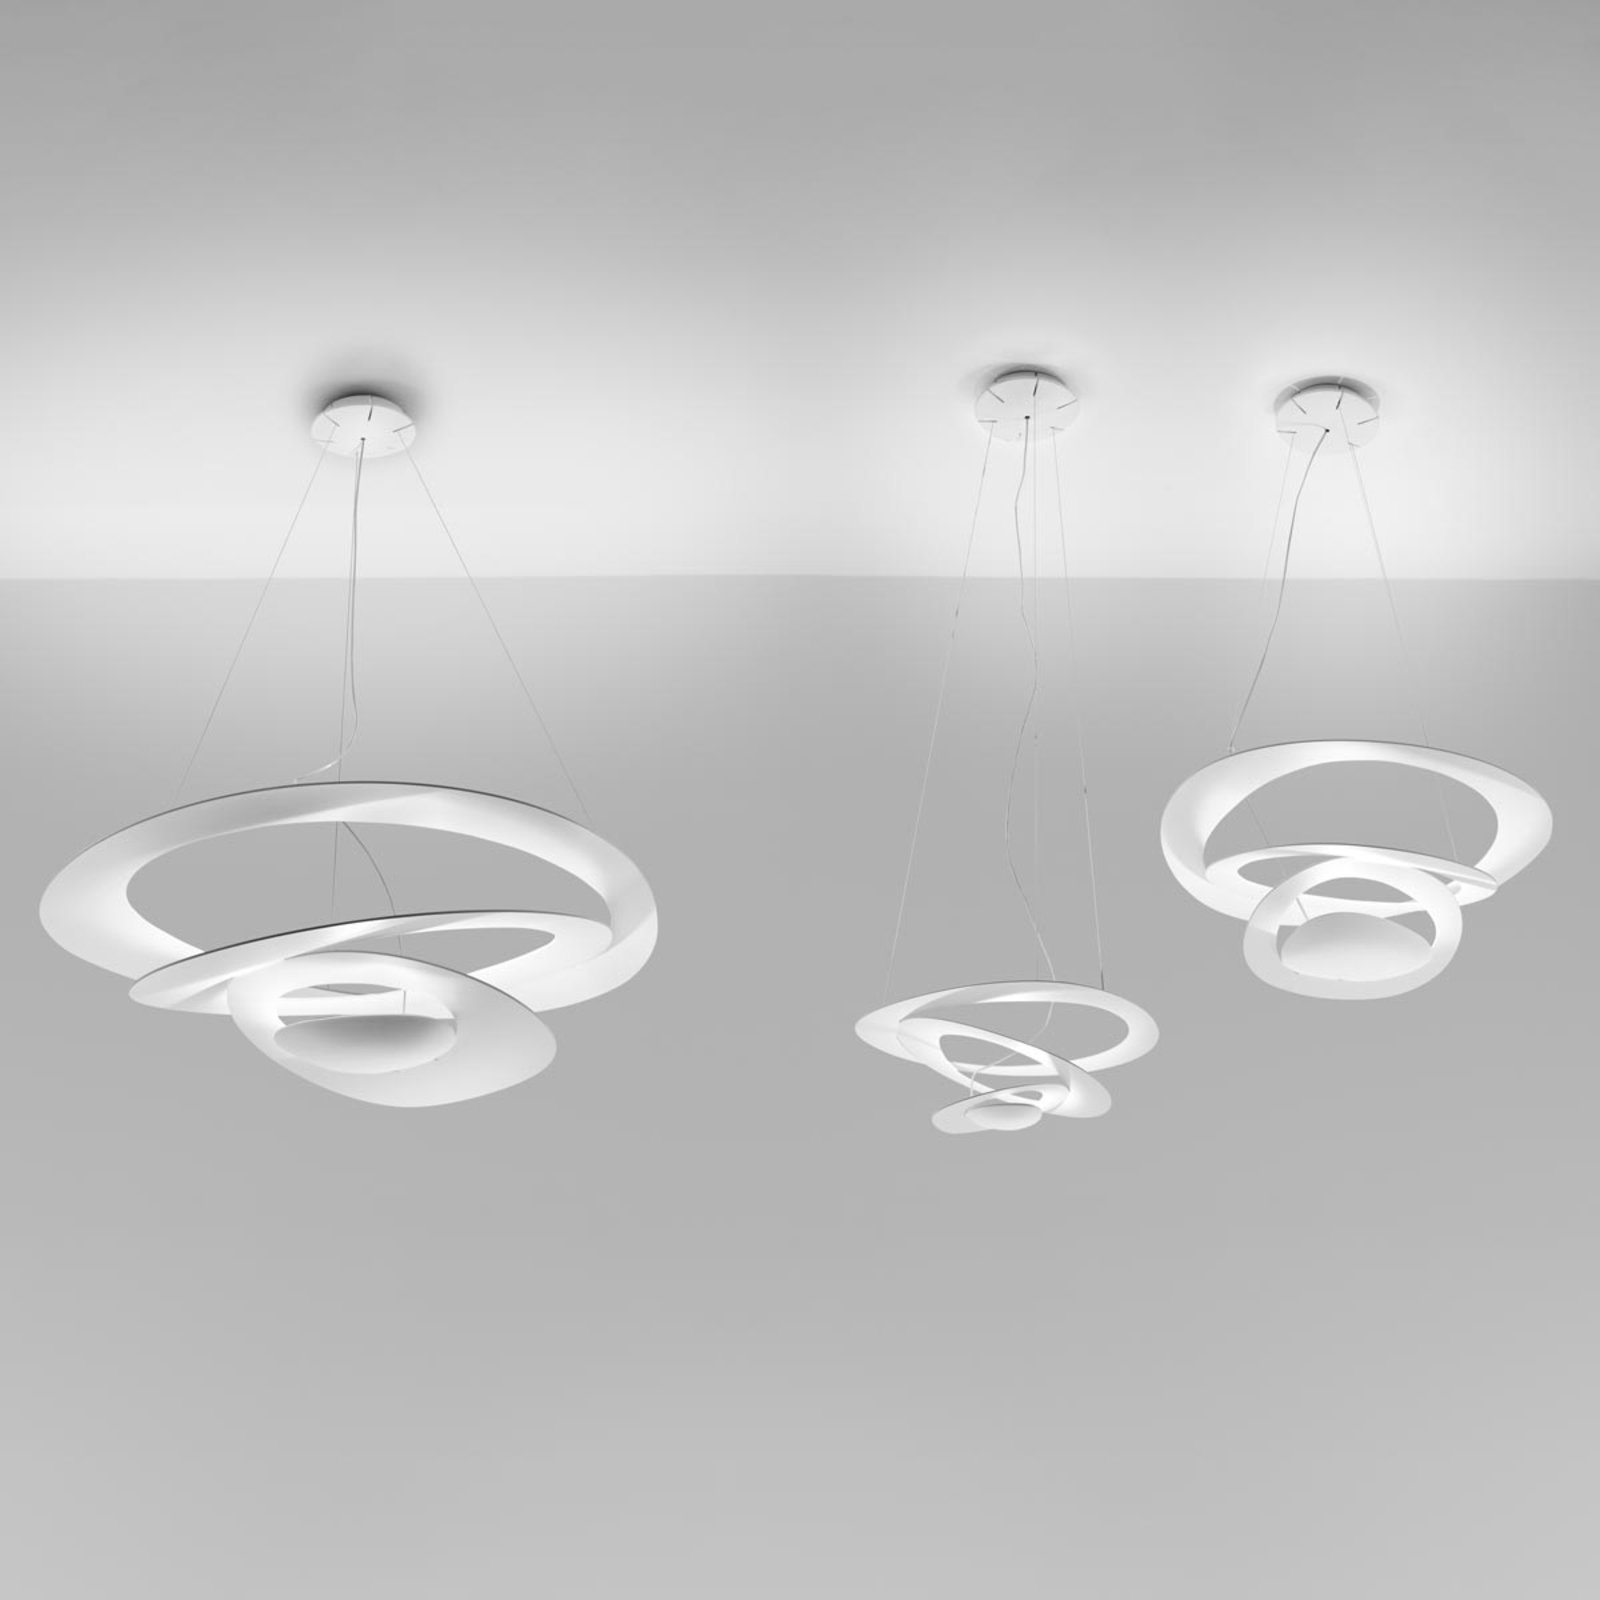 Suspension LED de designer Pirce Micro en blanc